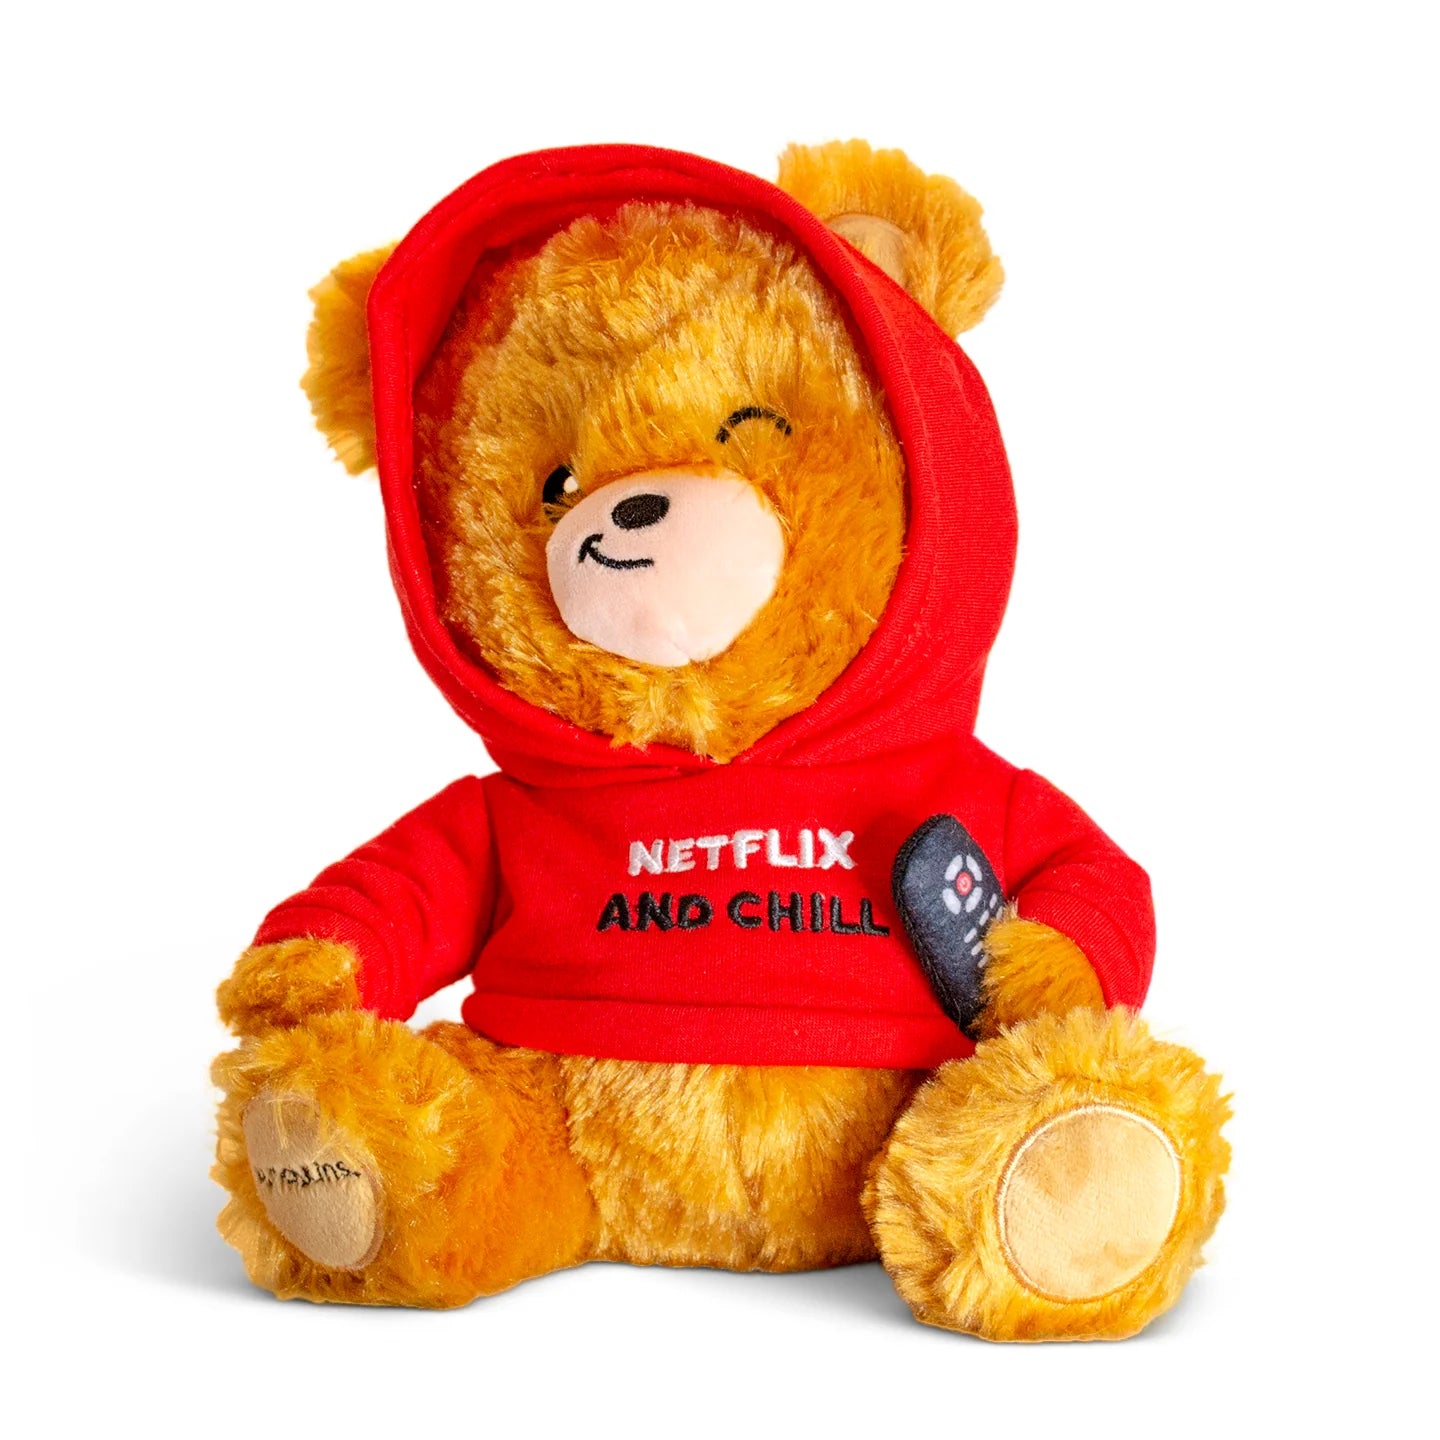 "Netflix and Chill" Teddy Bear Plushie